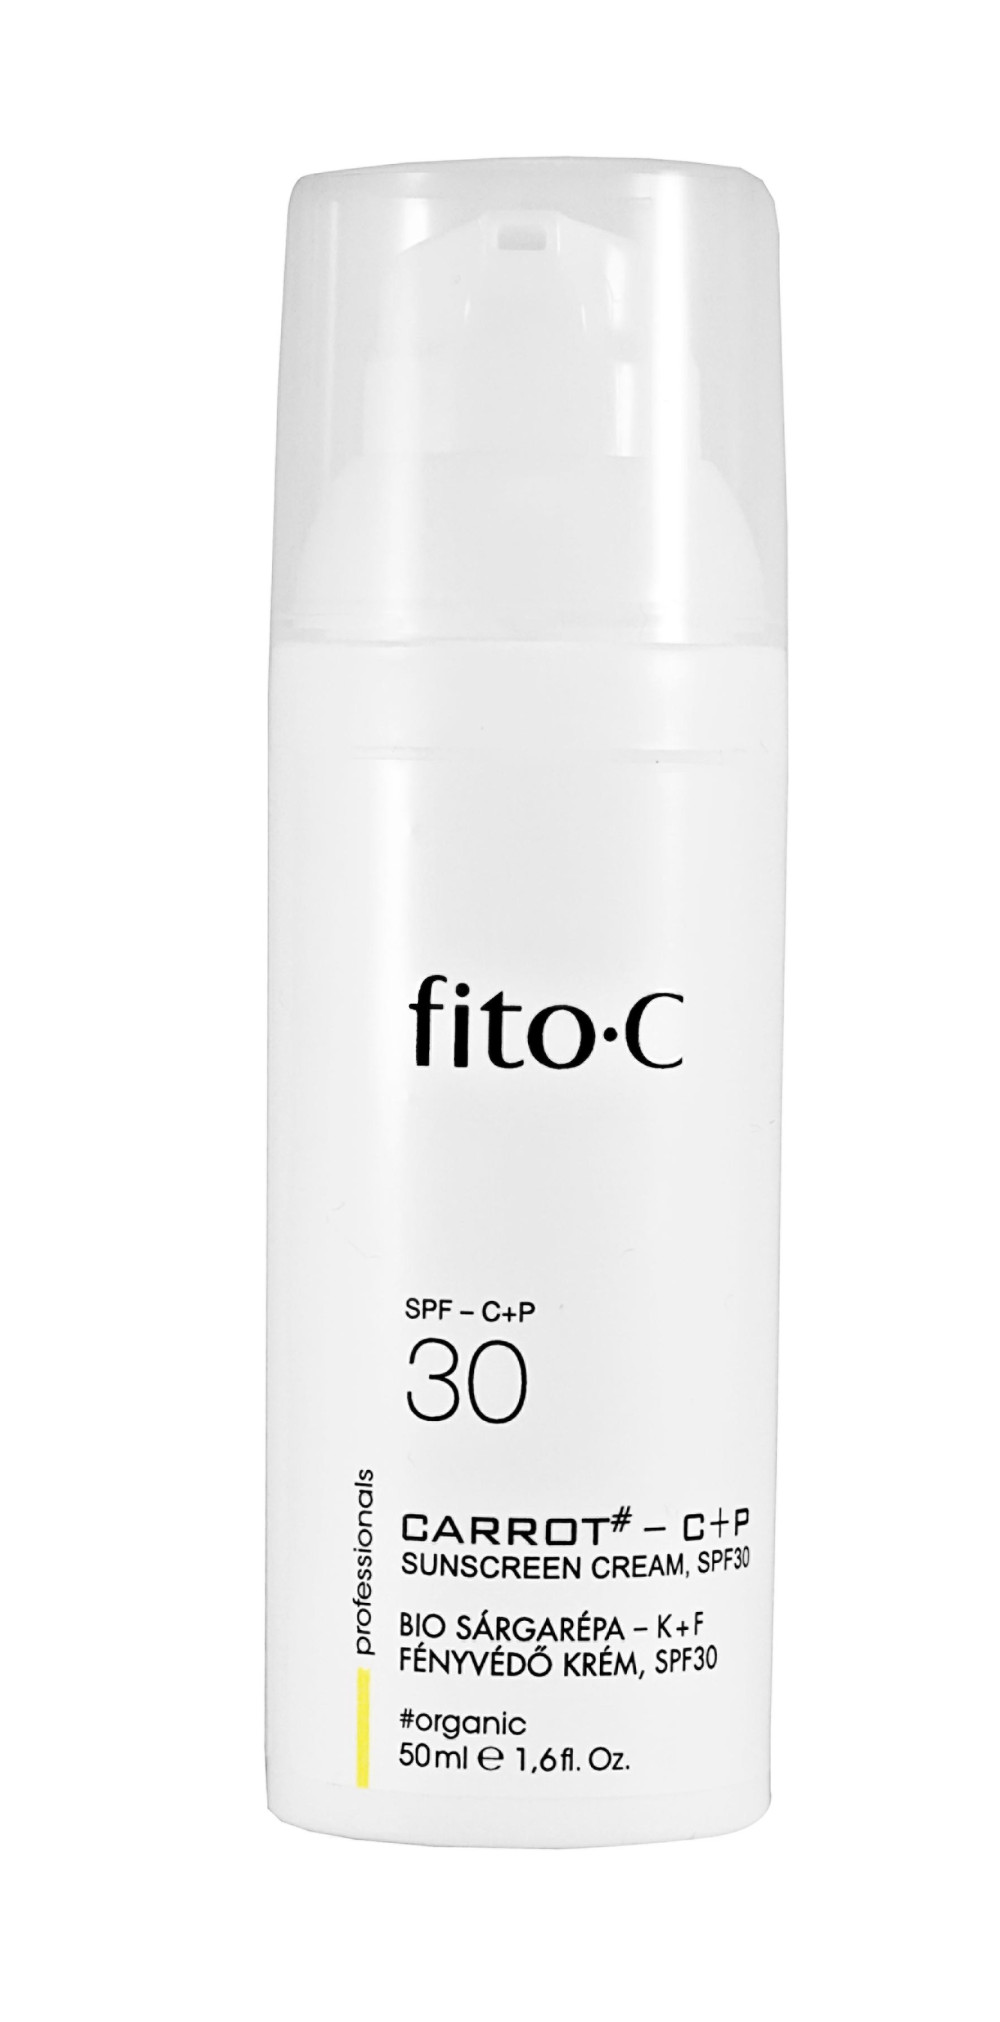 fito.C - Carrot - C+P Sunscreen Cream, SPF30 - Bio Sárgarépa - K+F Fényvédő Krém, SPF30, 50ml